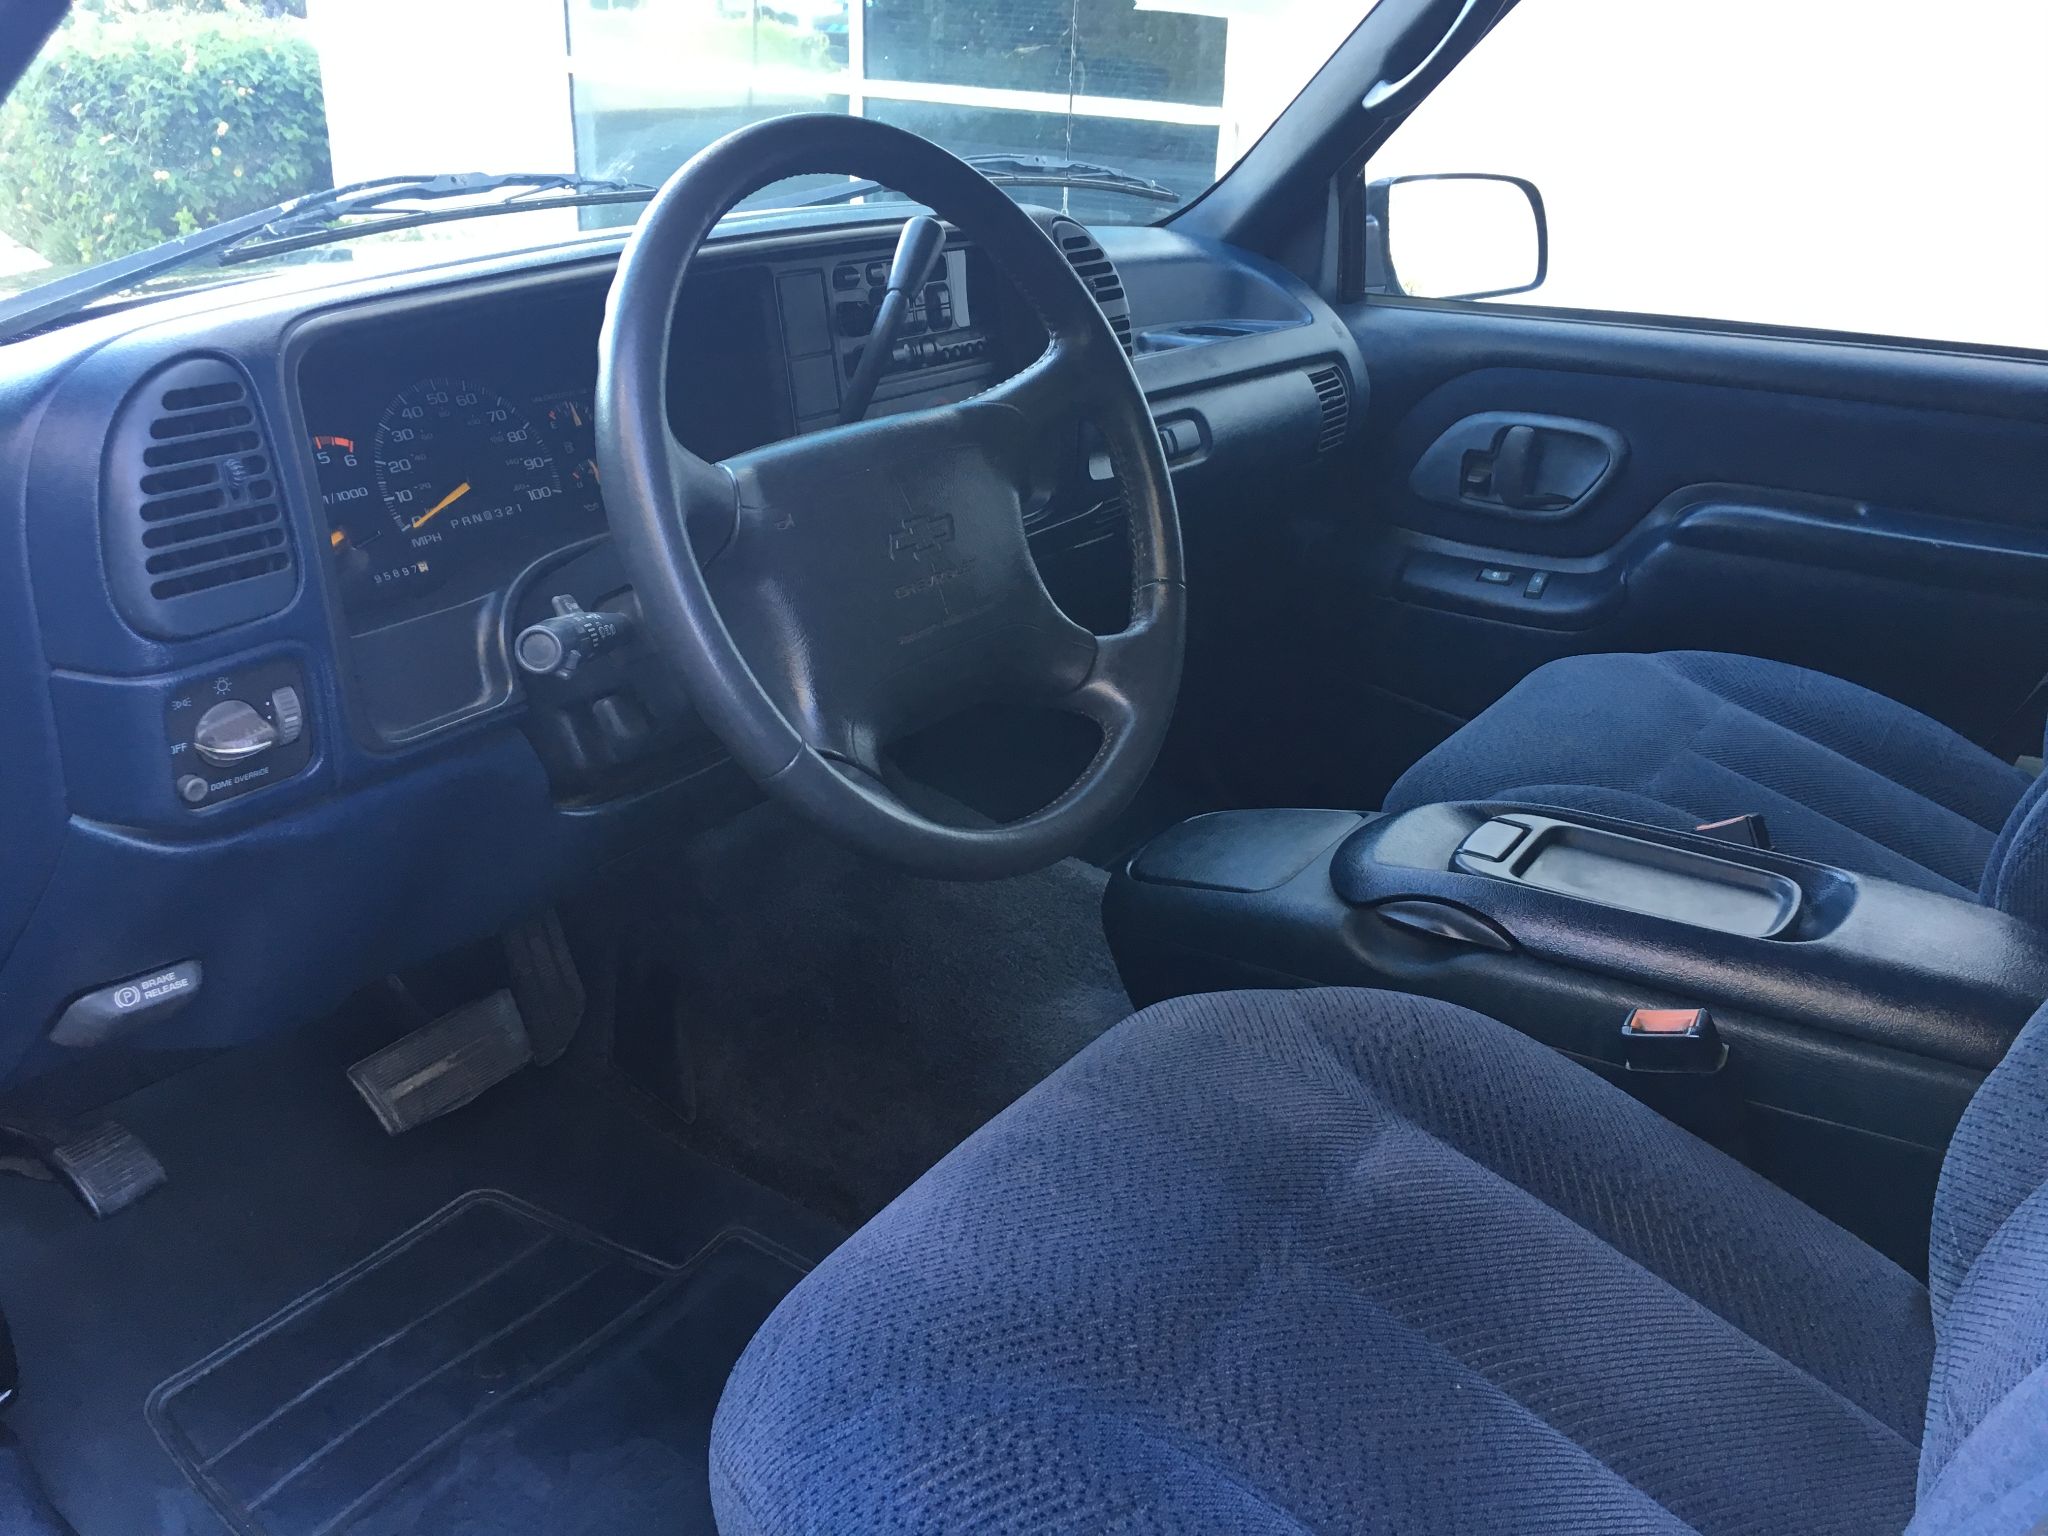 1996 Chevrolet Suburban 5.7 LS